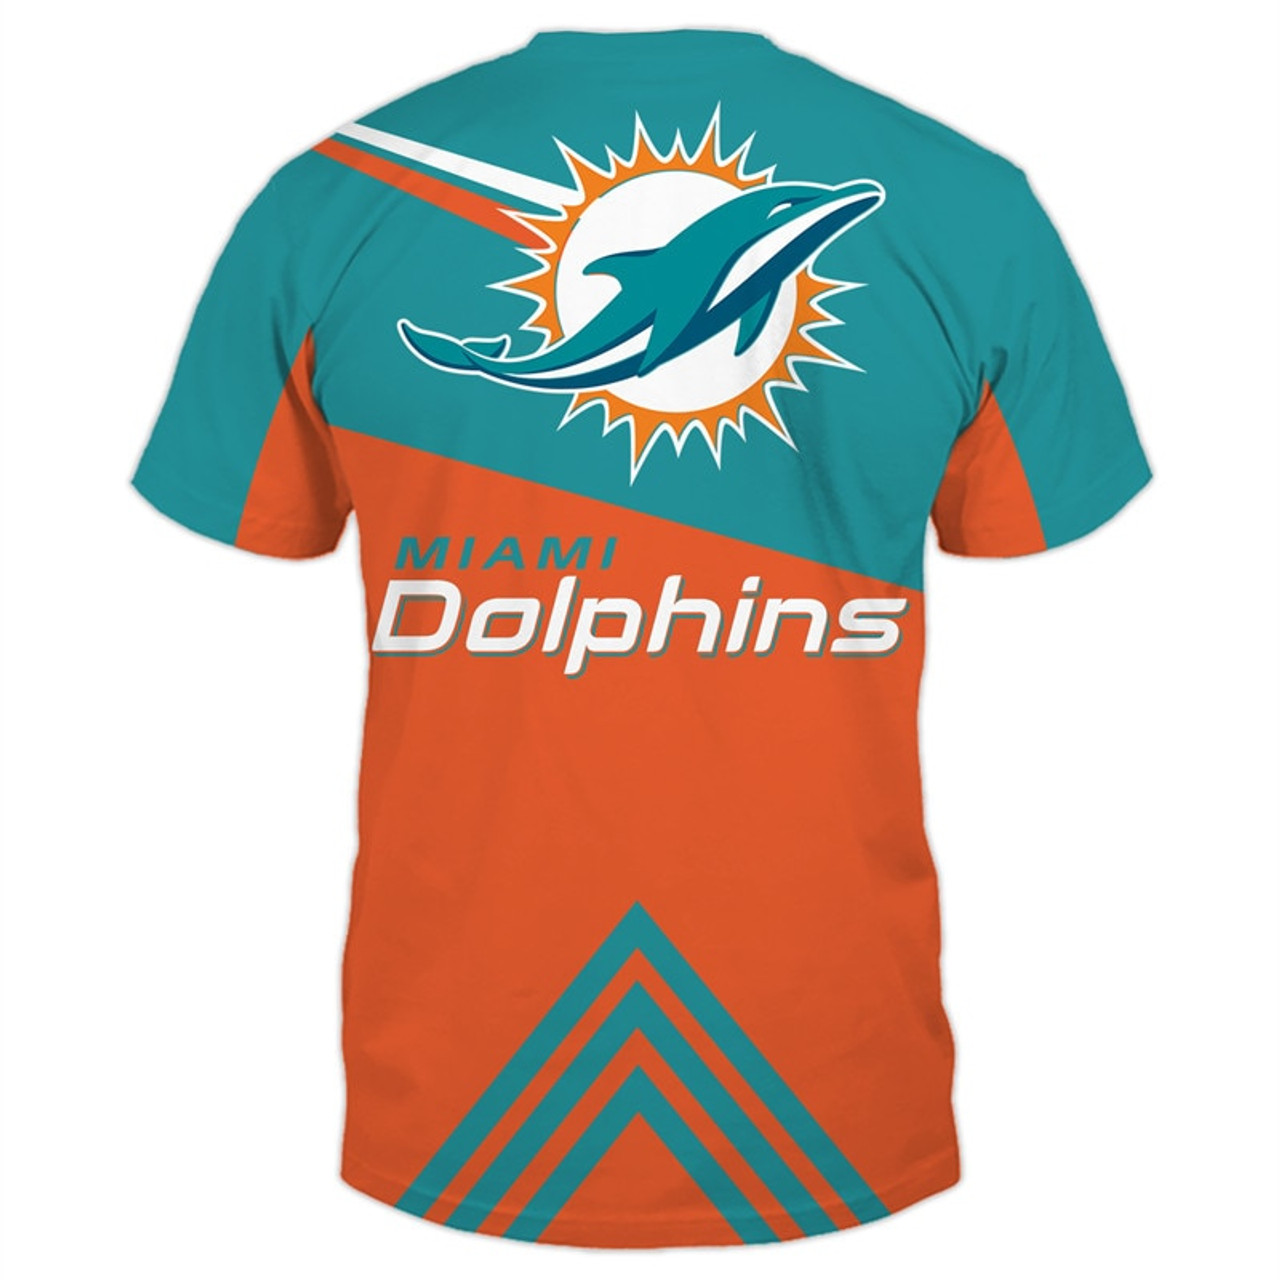 miami dolphins jerseys on sale